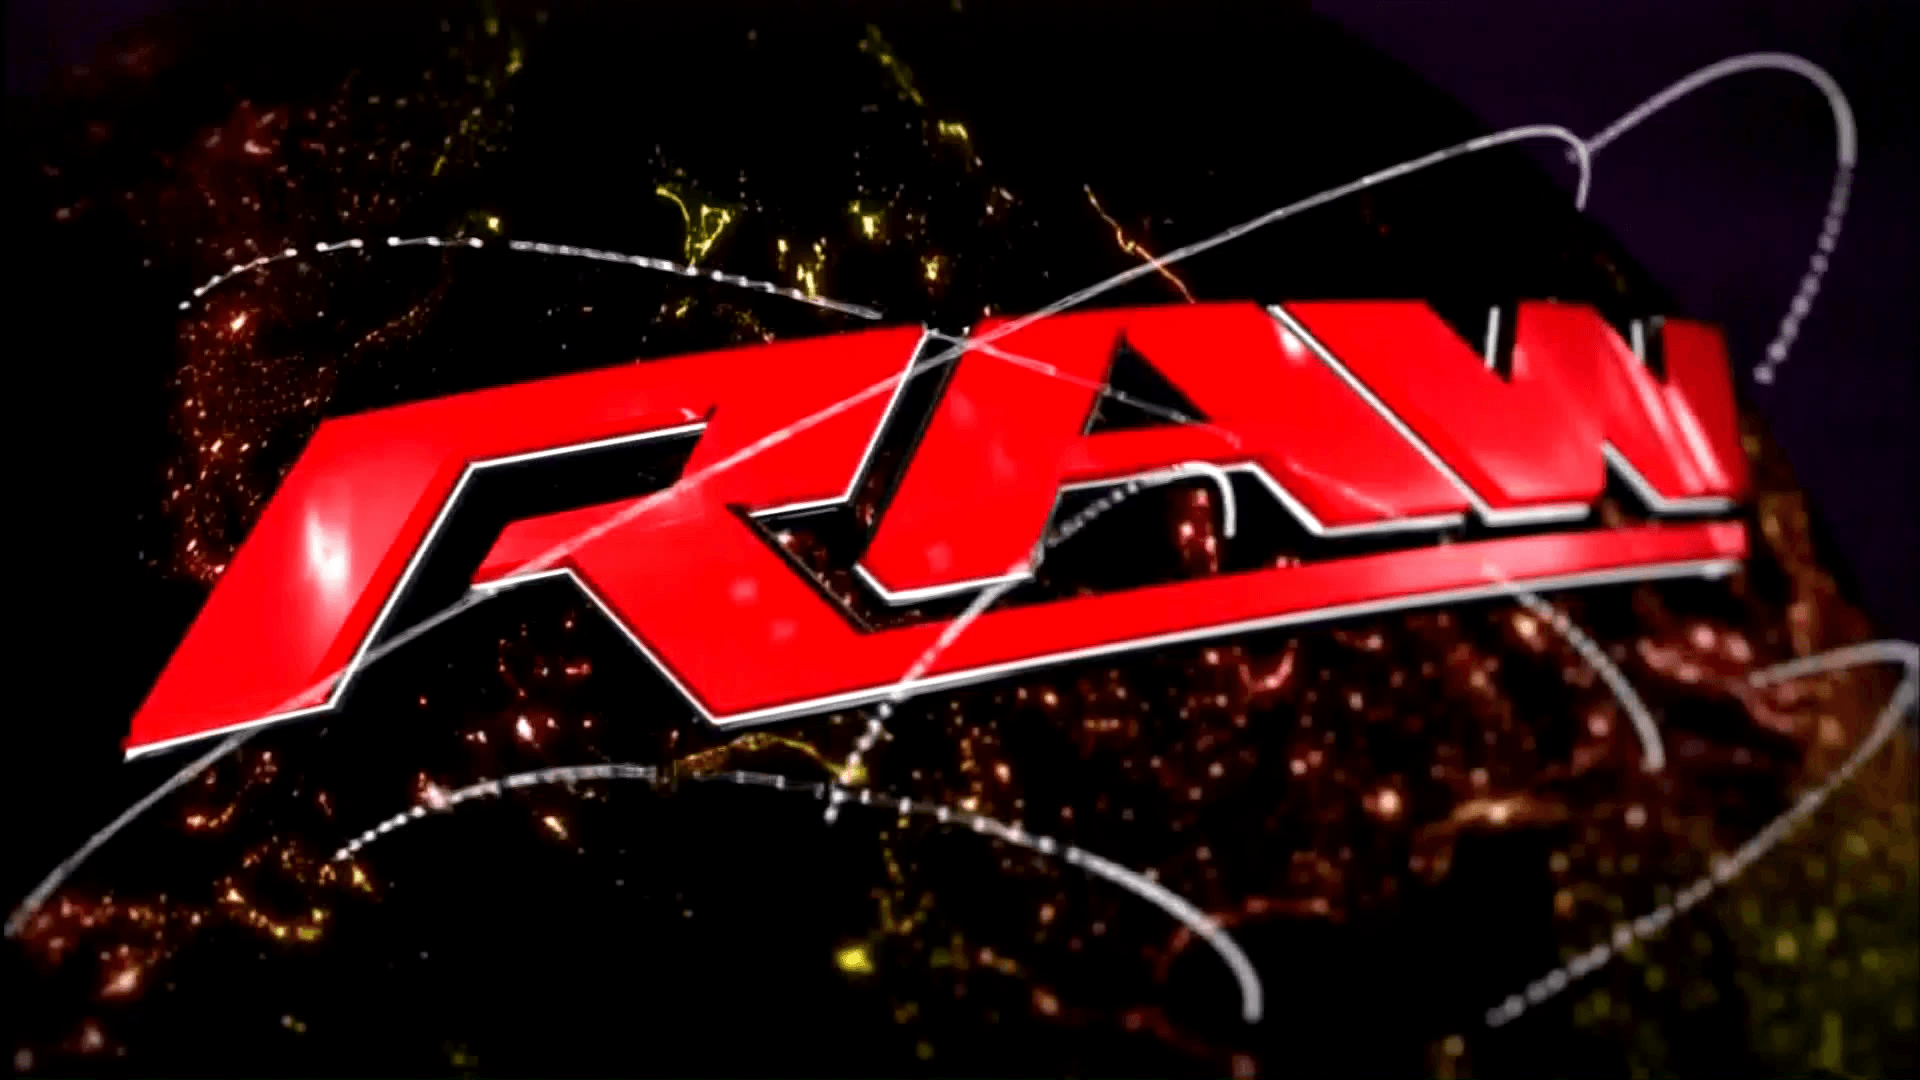 WWE Raw Wallpaper 3 HD Wallpaper Free